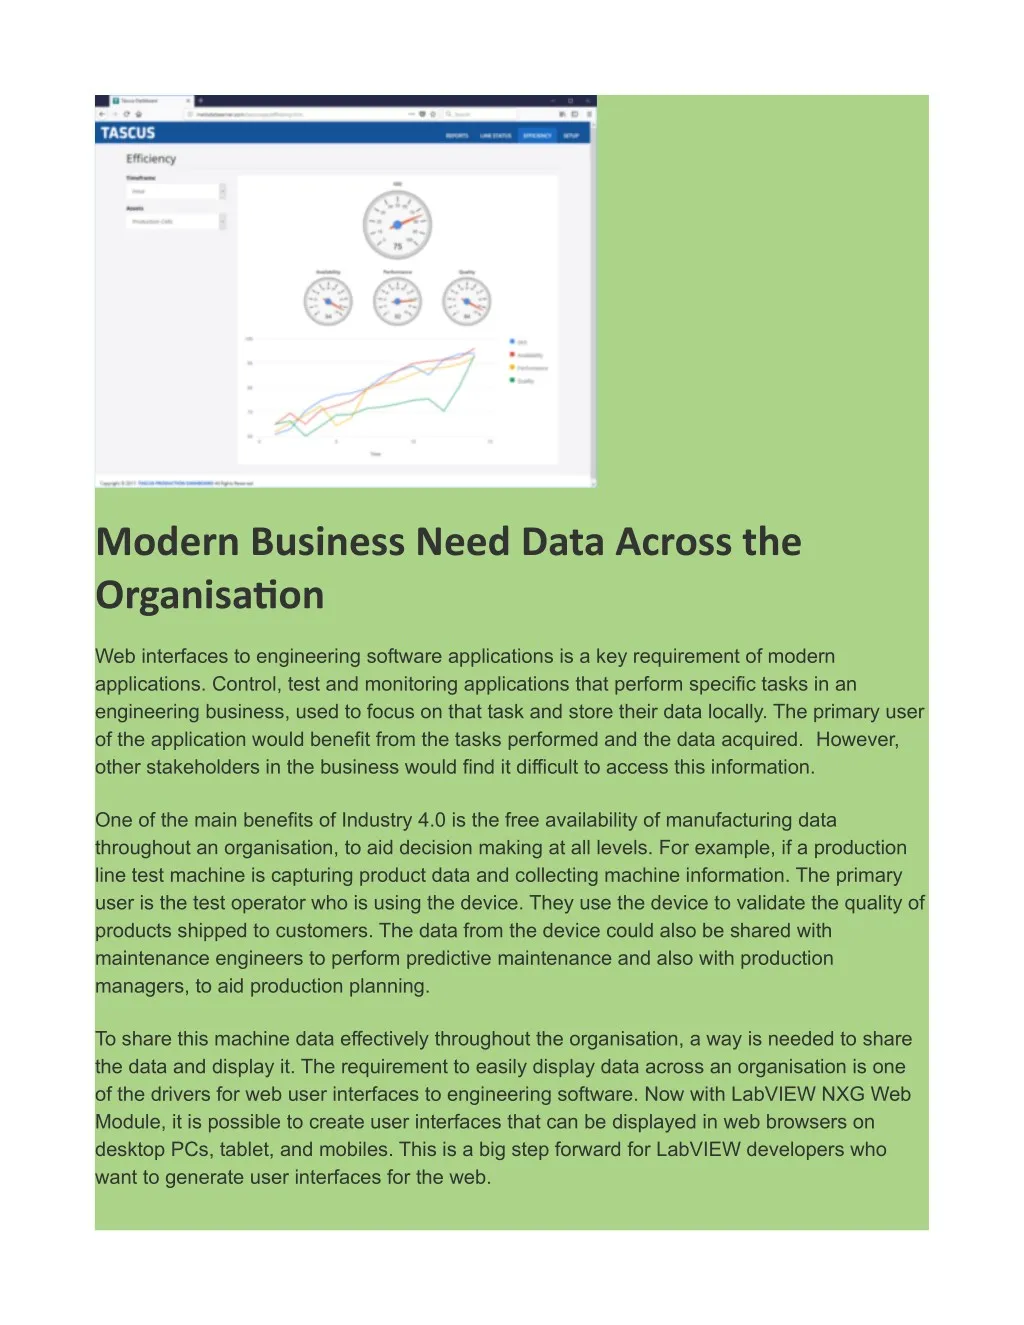 modern business need data across the organisation